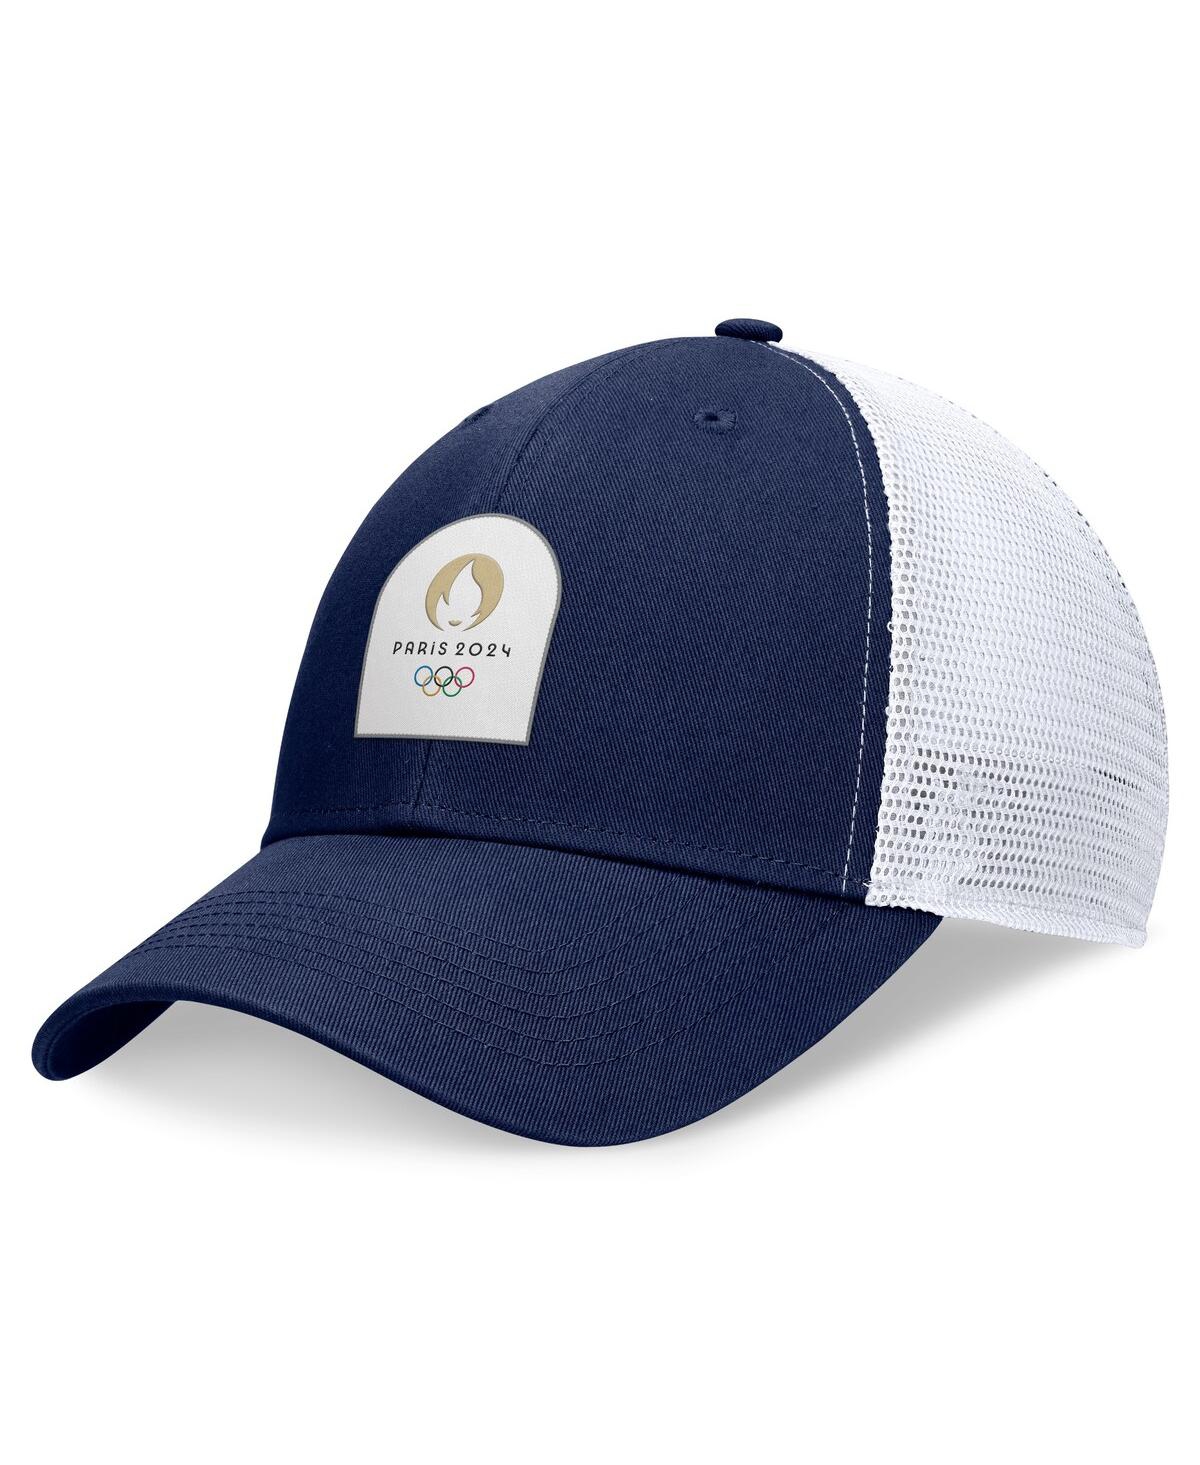 Men's Navy/White Paris 2024 Summer Olympics Adjustable Hat - Navy, White